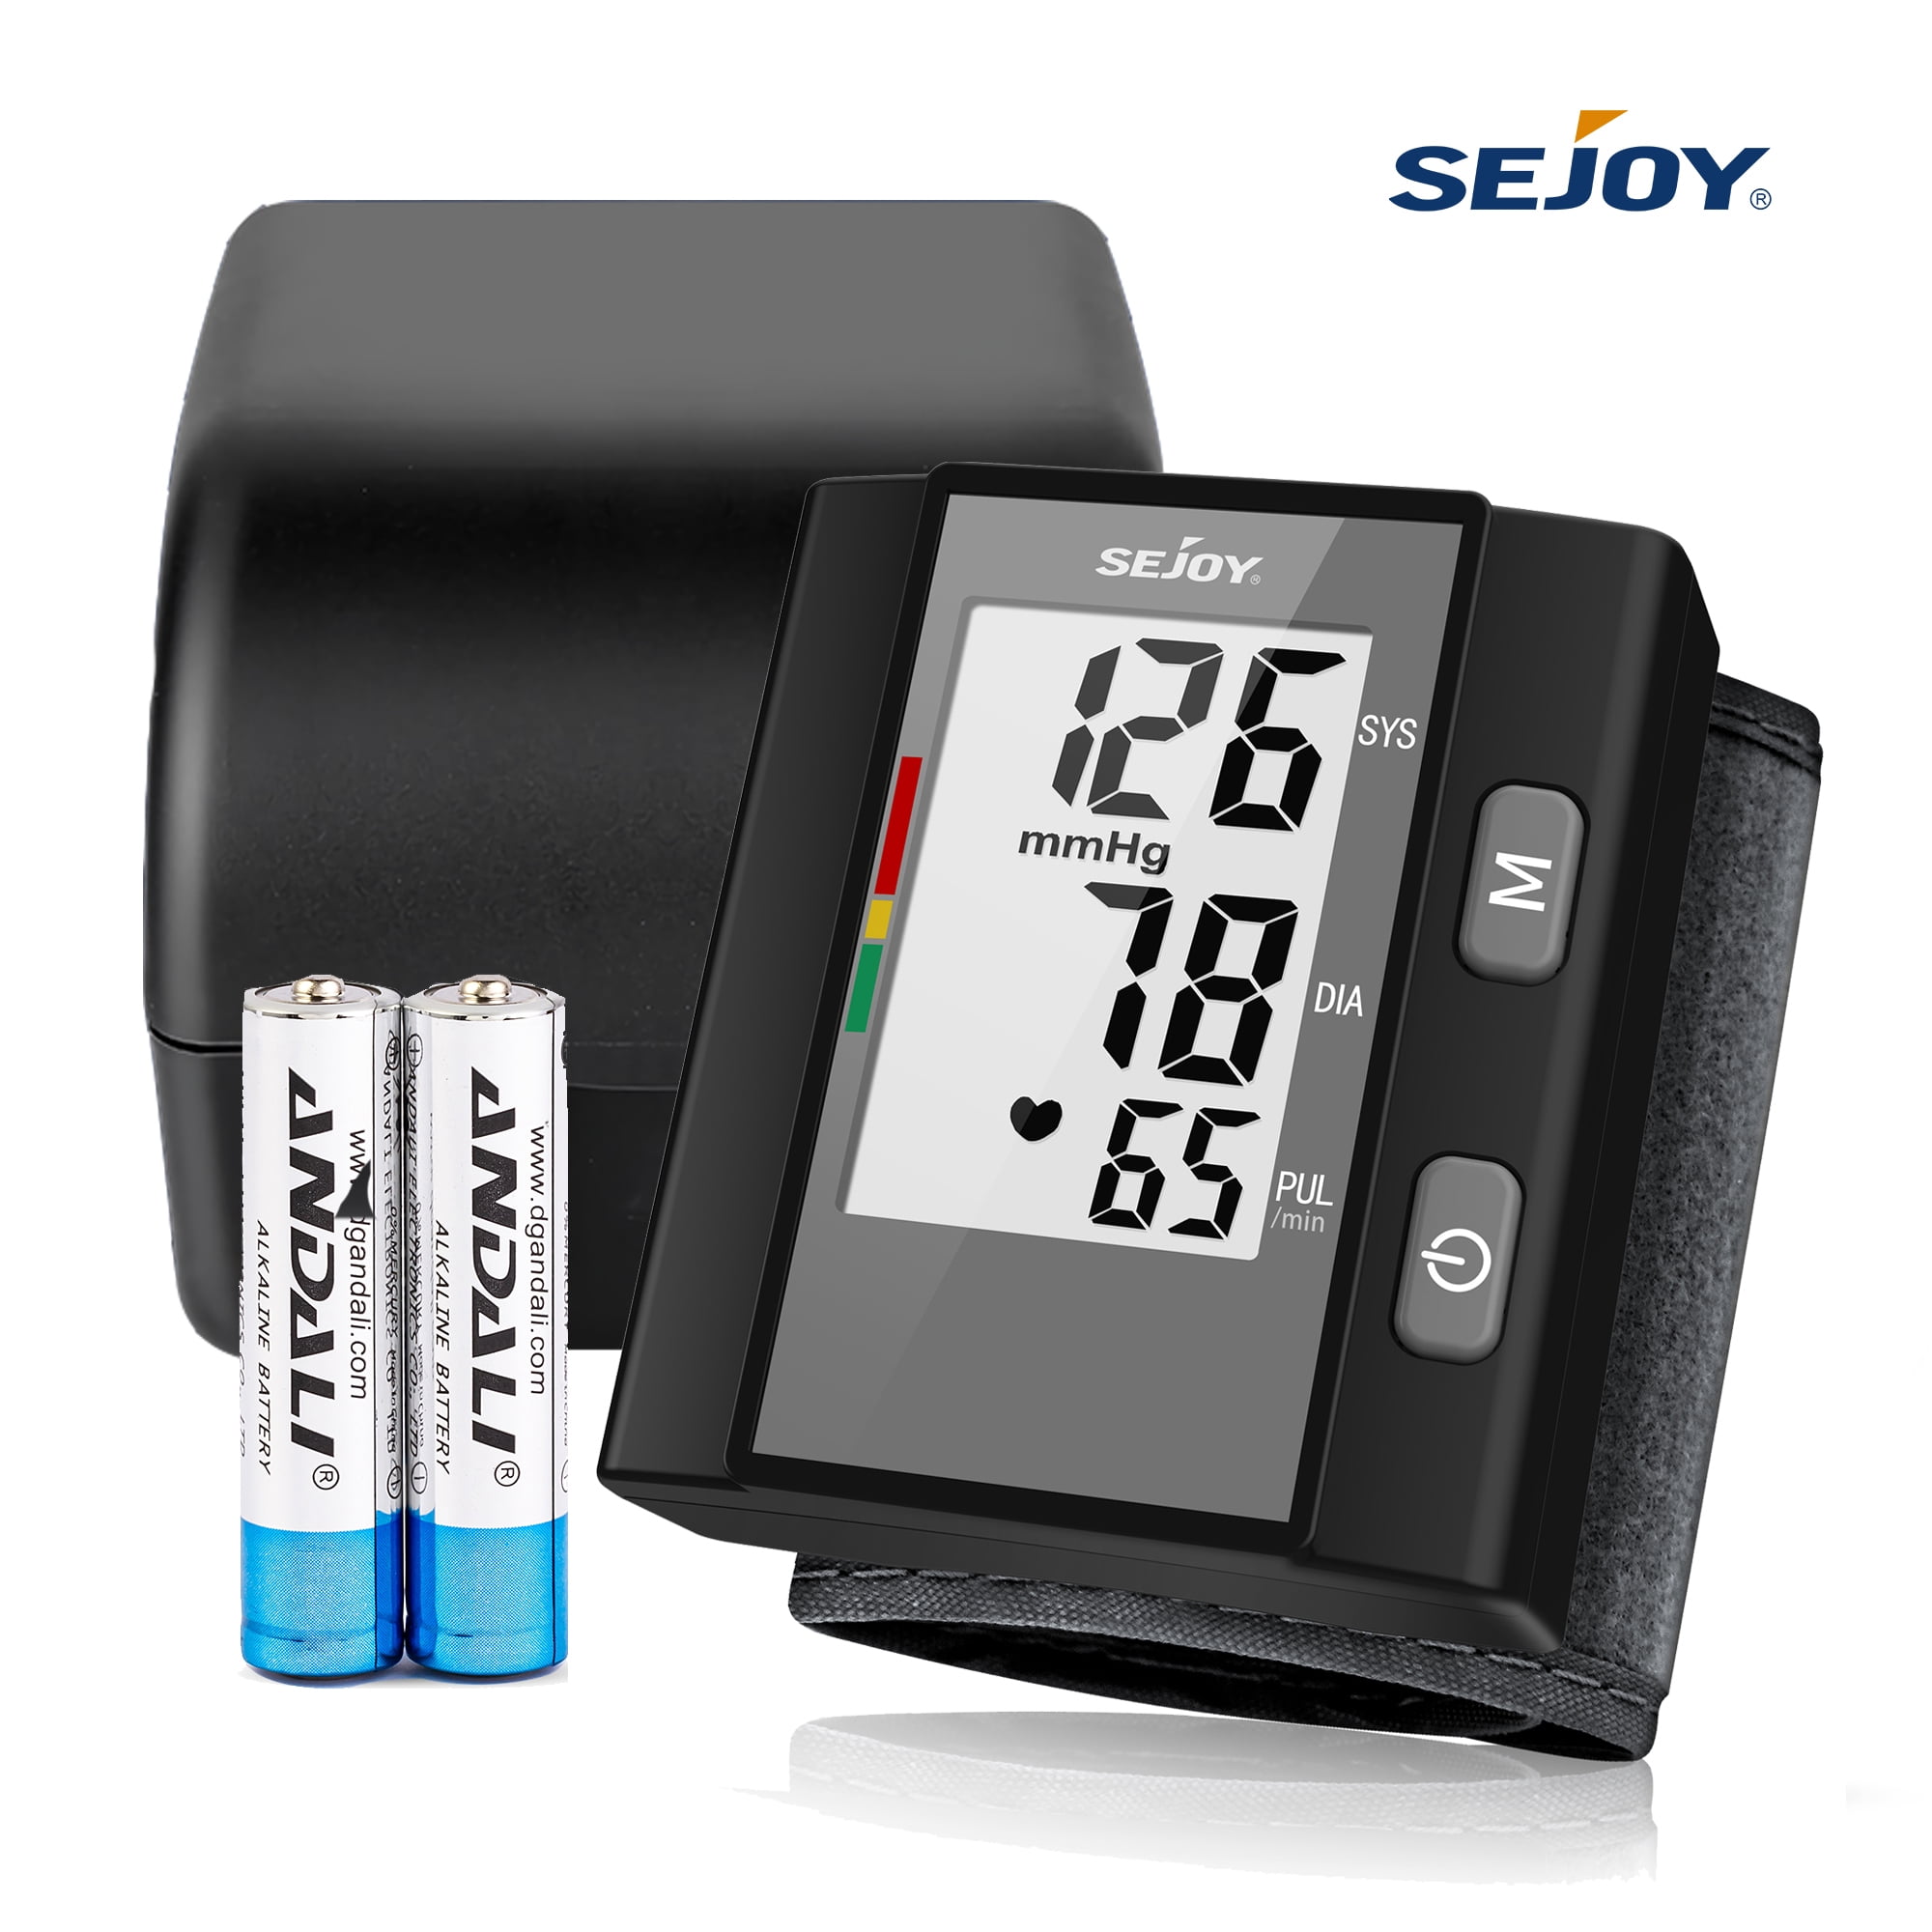 BrightSense Portable LED Wrist Blood Pressure Monitor - VystaMed